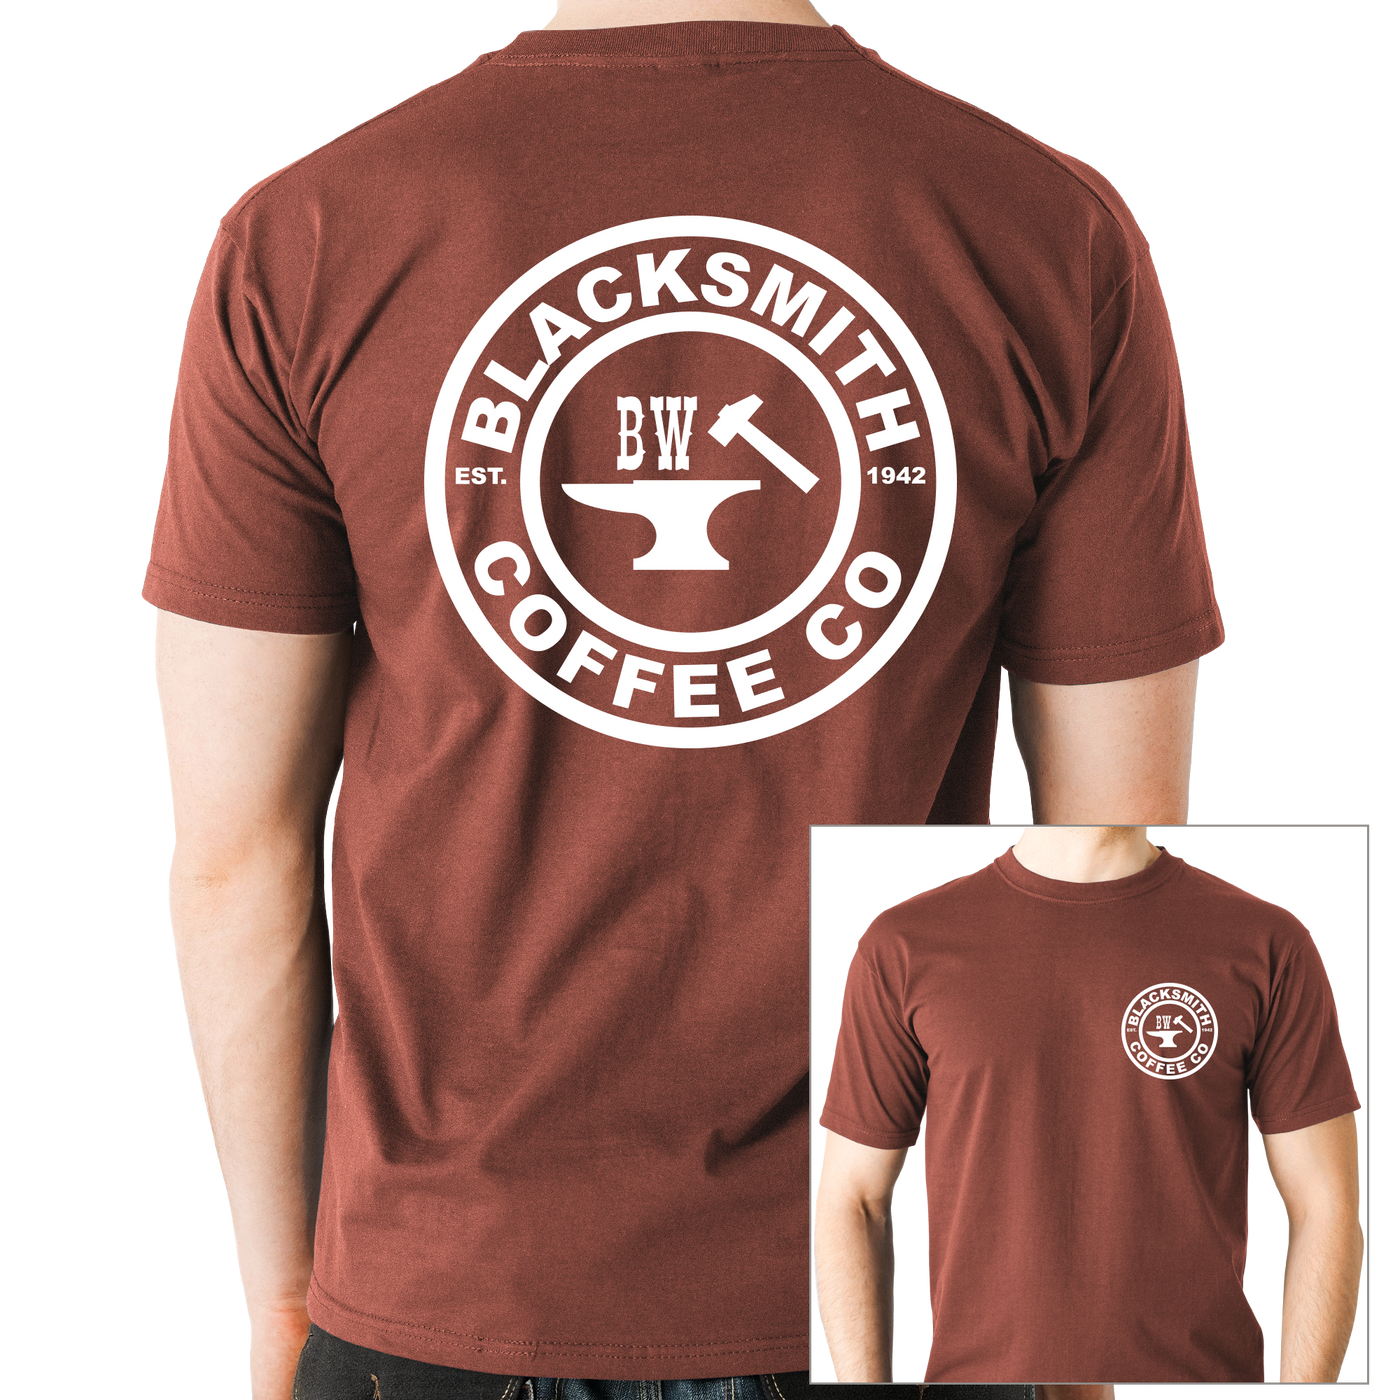 BW Blacksmith (Signature Series) Cotton T-Shirt: Brick